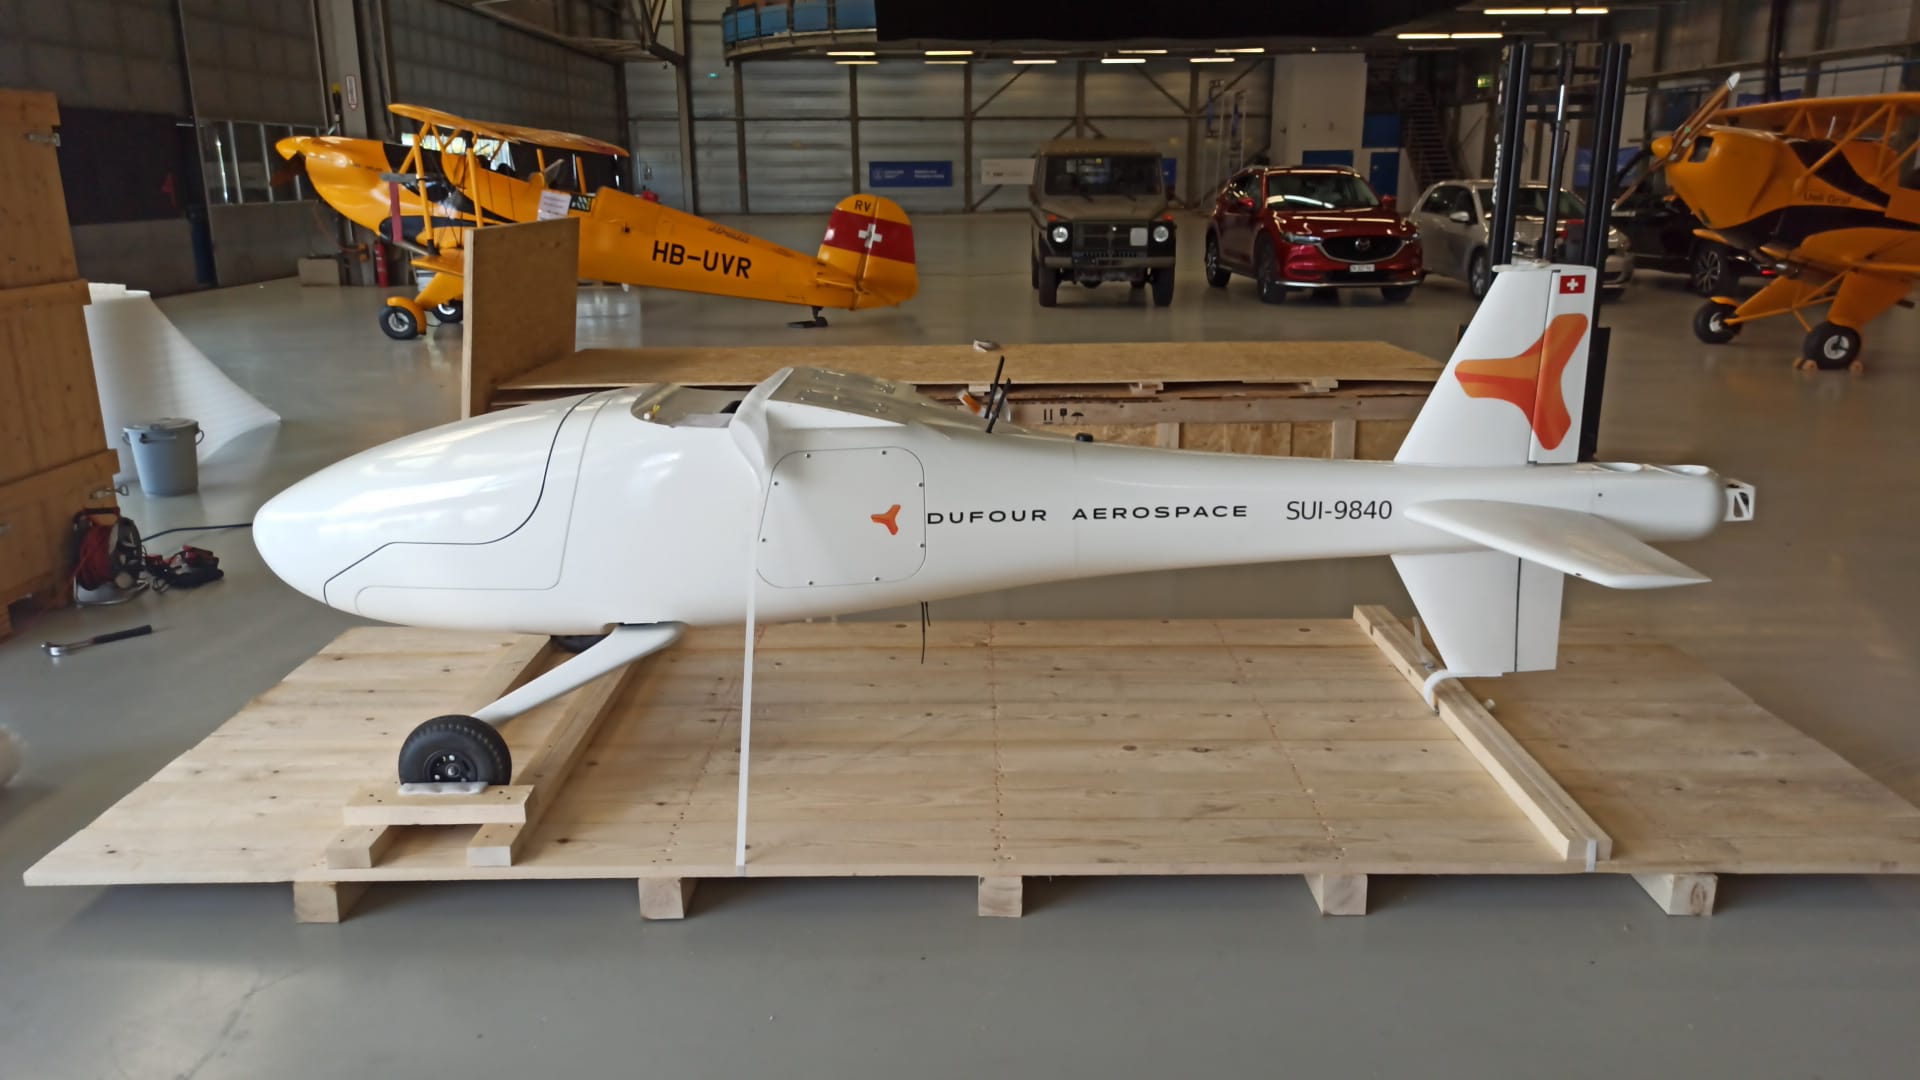 Dufour Aerospace Flugzeug auf Holz-Transportboden